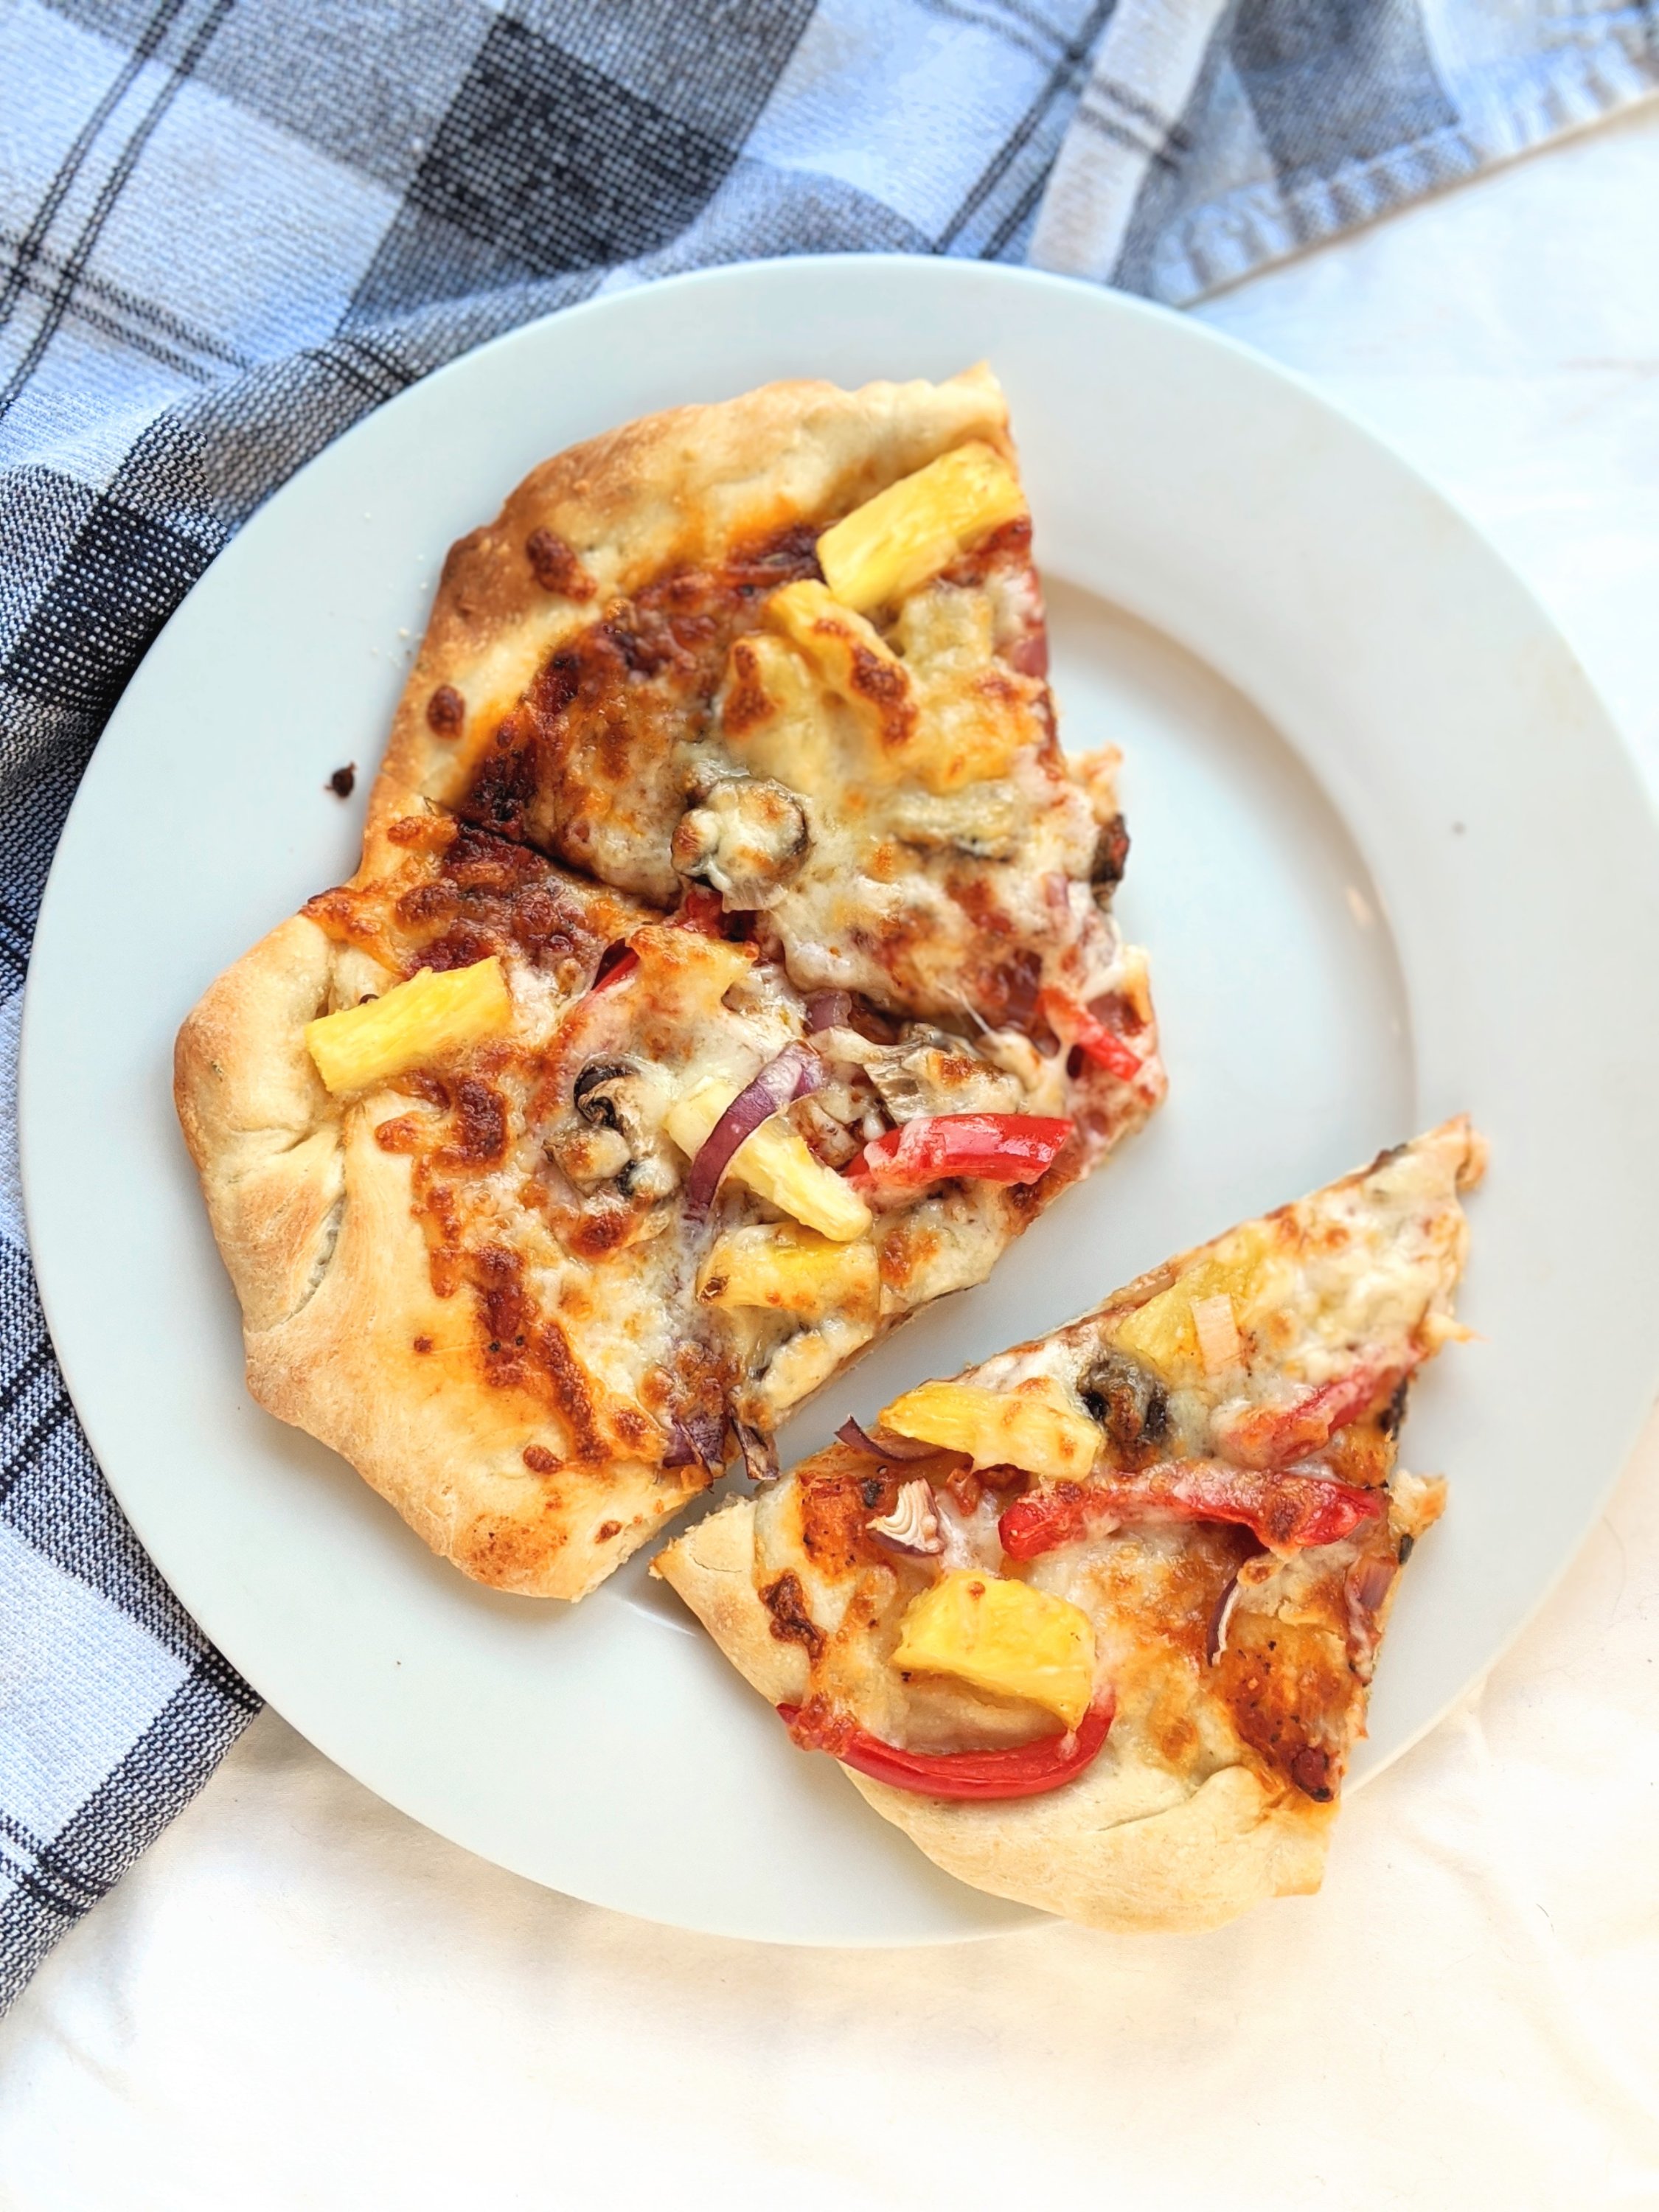 sourdough pizza recipe vegan vegetarian gluten free non dairy free eggless recipes for sourdough pizza dough herbs and olive oil